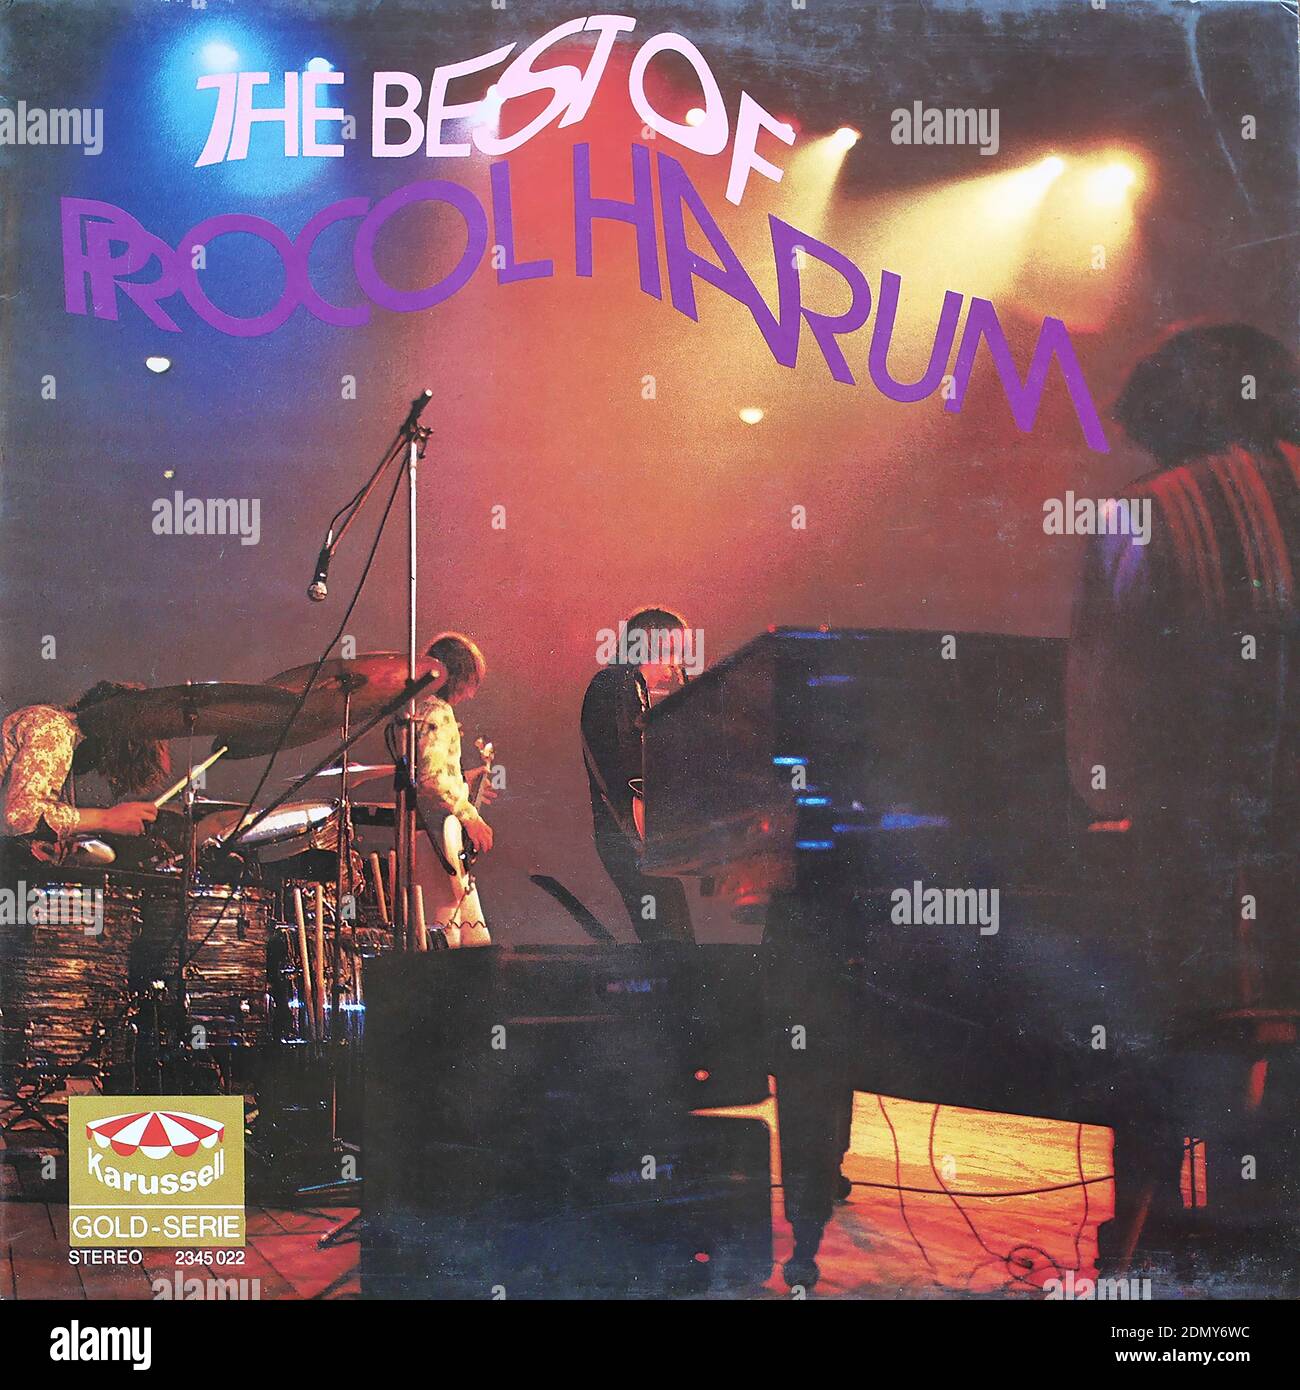 Procol Harum - The Best Of, Karussell 2345 022 - Vintage vinyl album cover  Stock Photo - Alamy